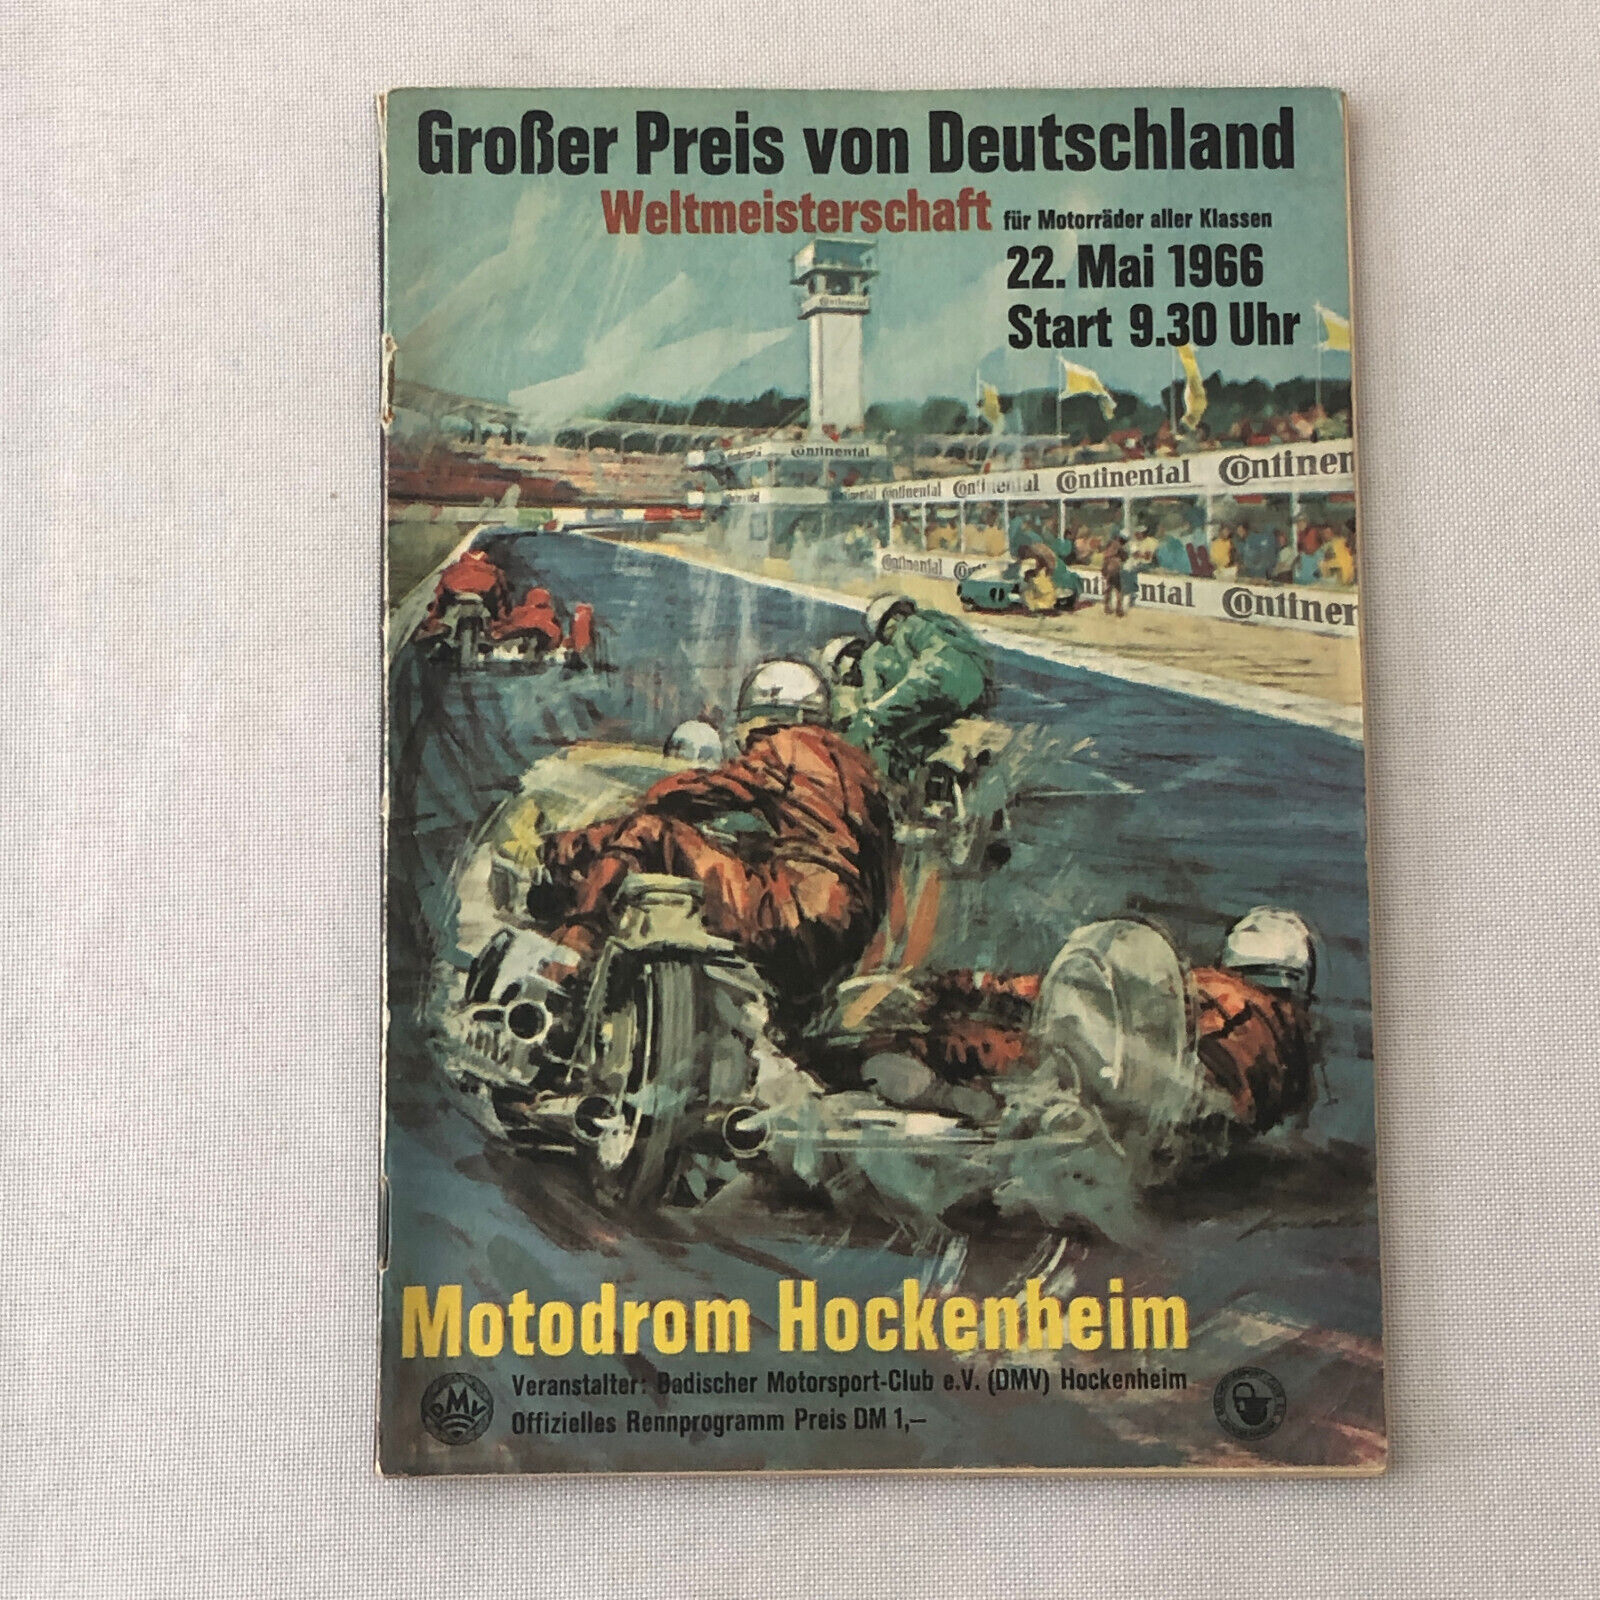 1966 Hockenheim Motorcycle Racing Grand Prix Race Program Book German